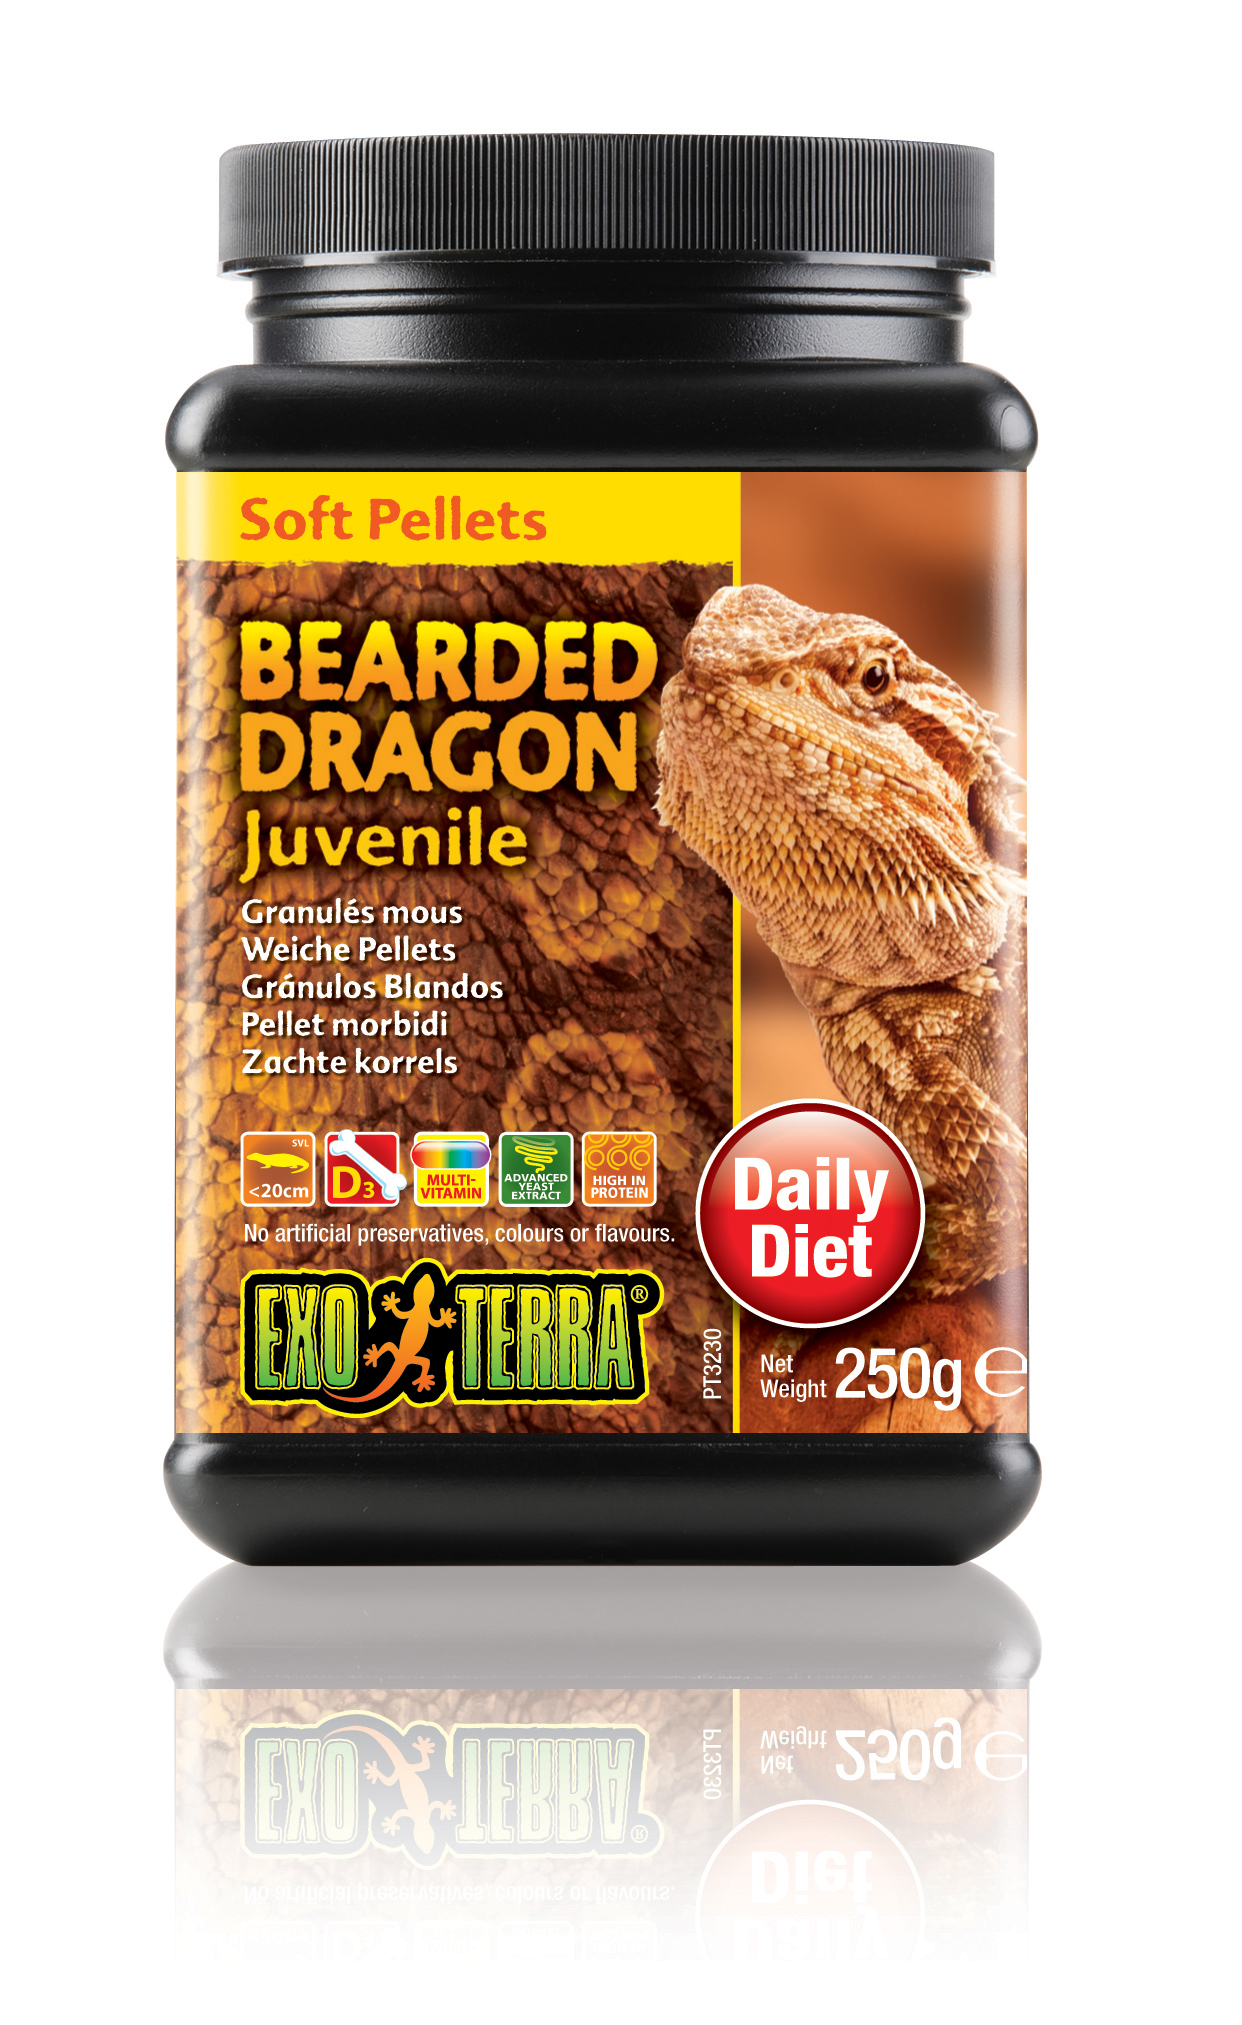 Ex soft pellets bearded dragon juvenile - Product shot